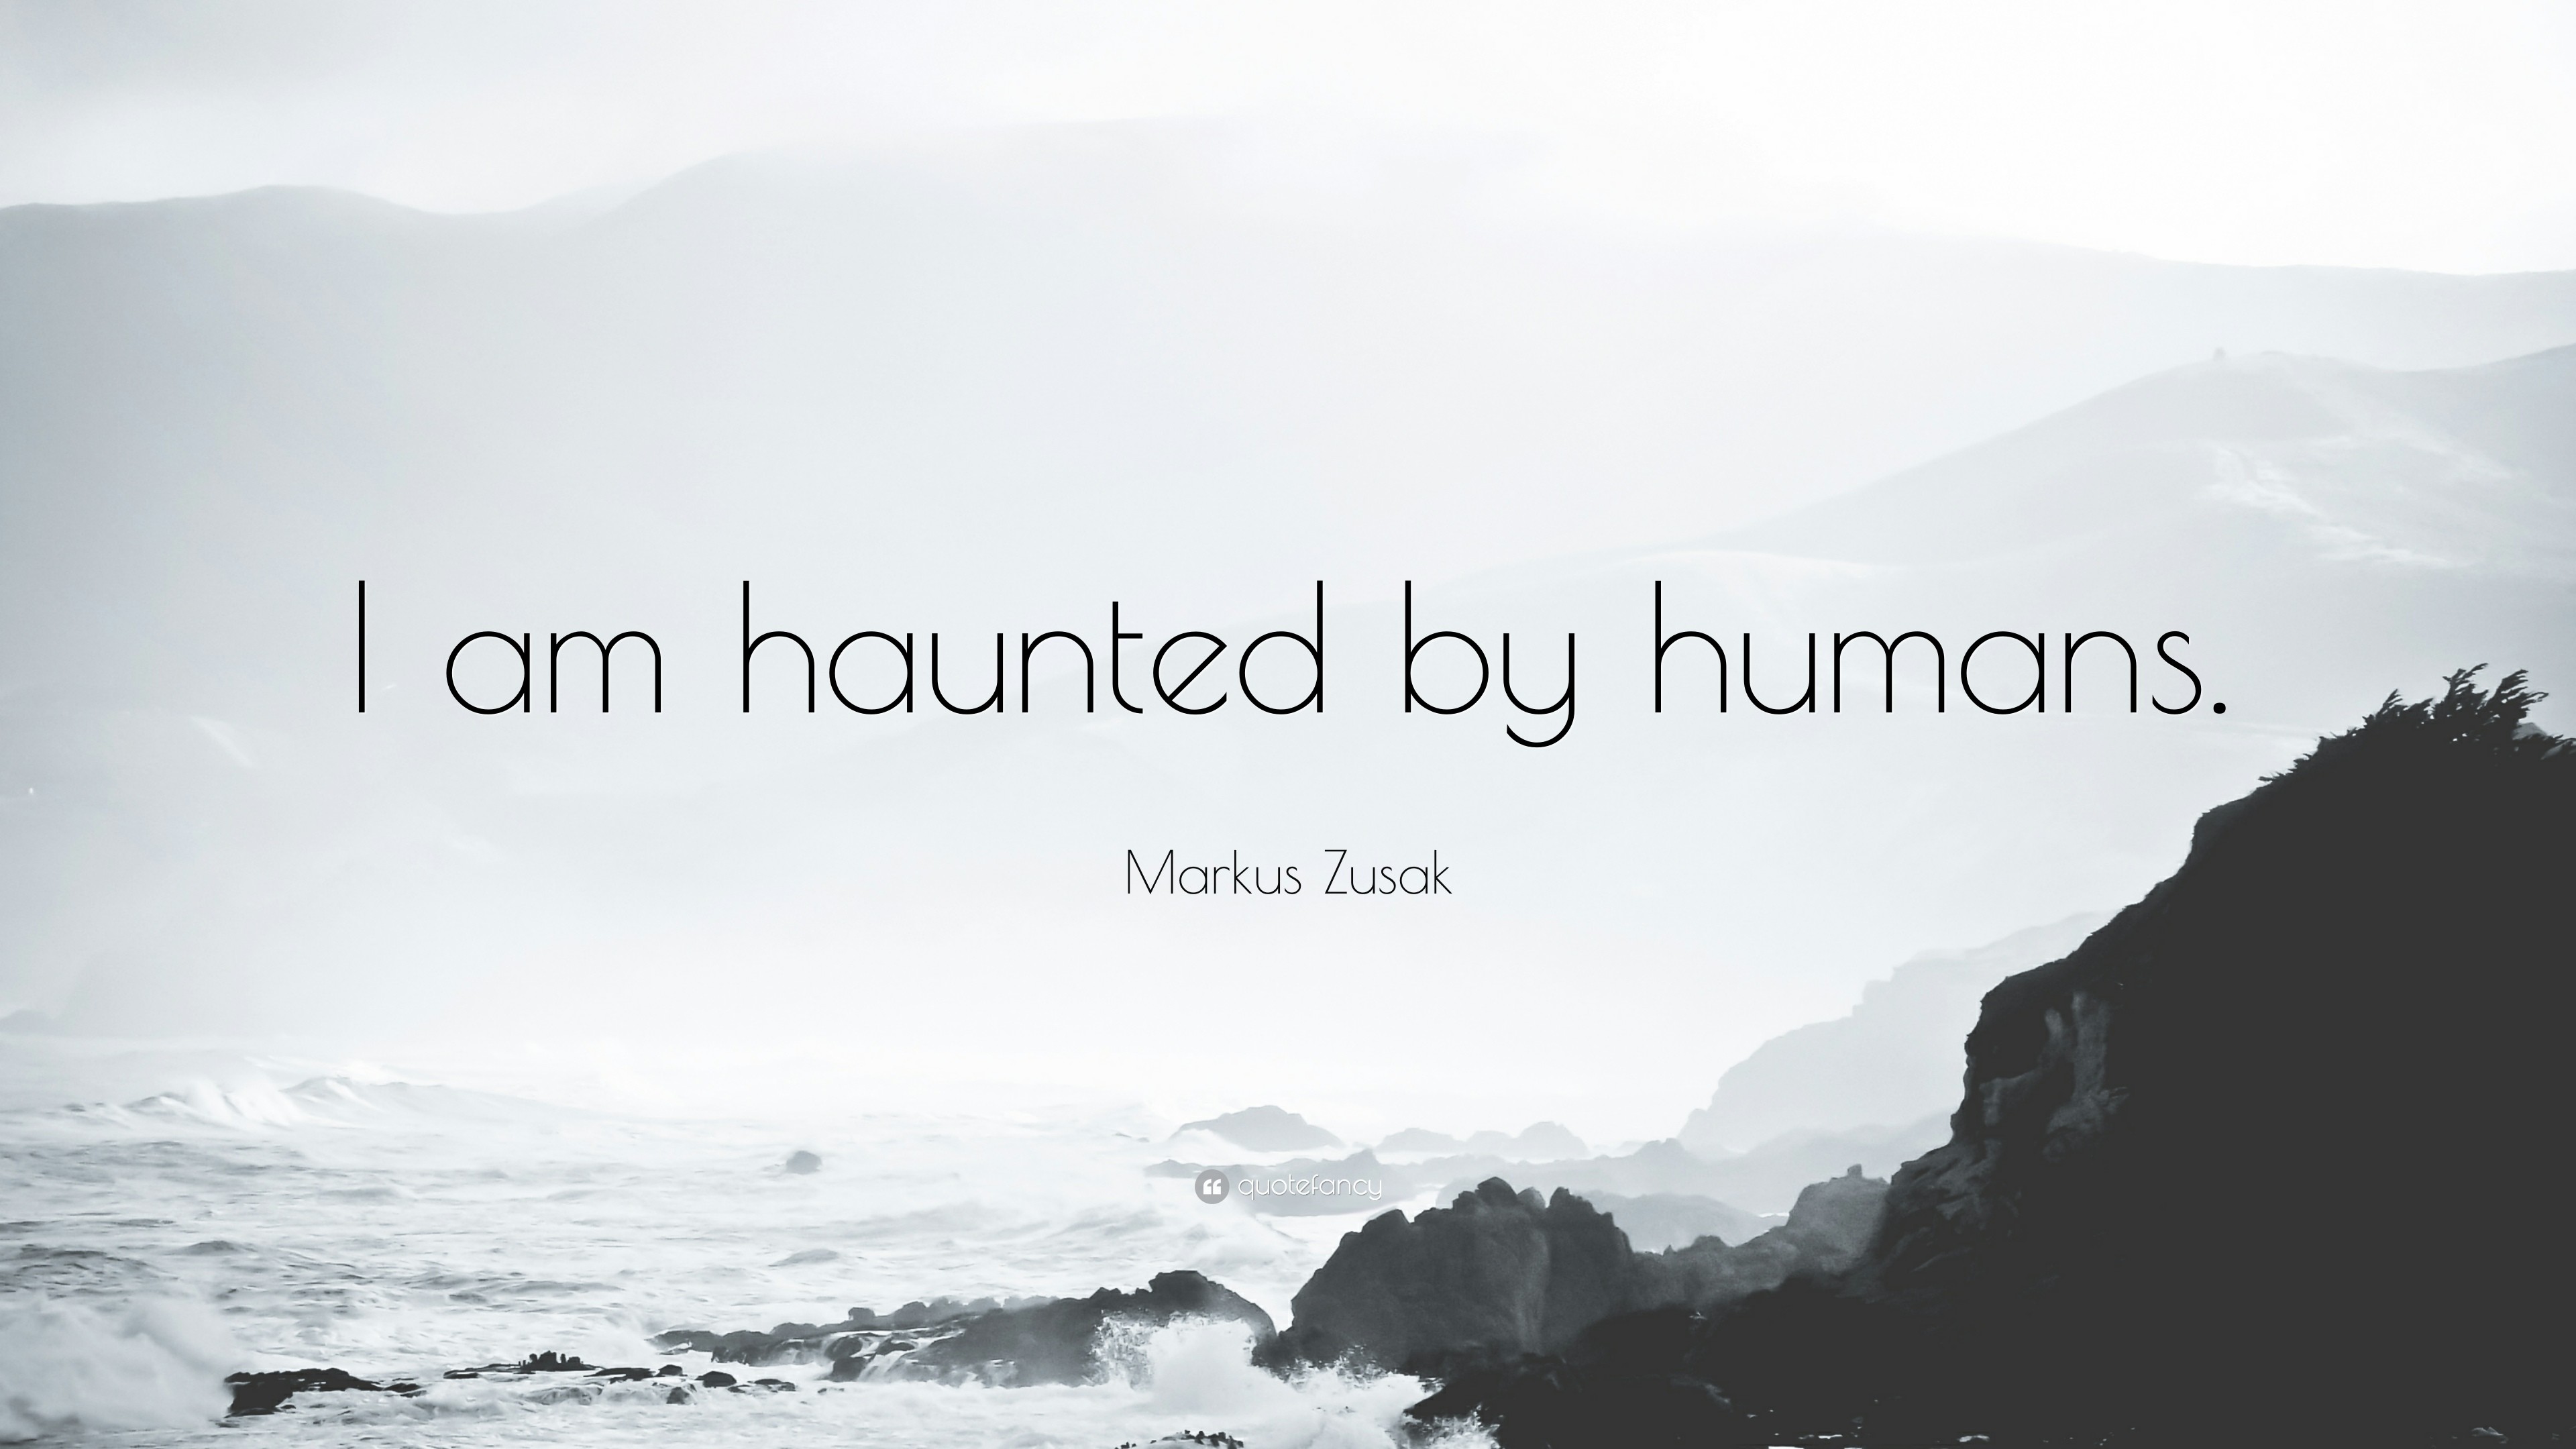 3840x2160 Markus Zusak Quote: “I am haunted by humans.”